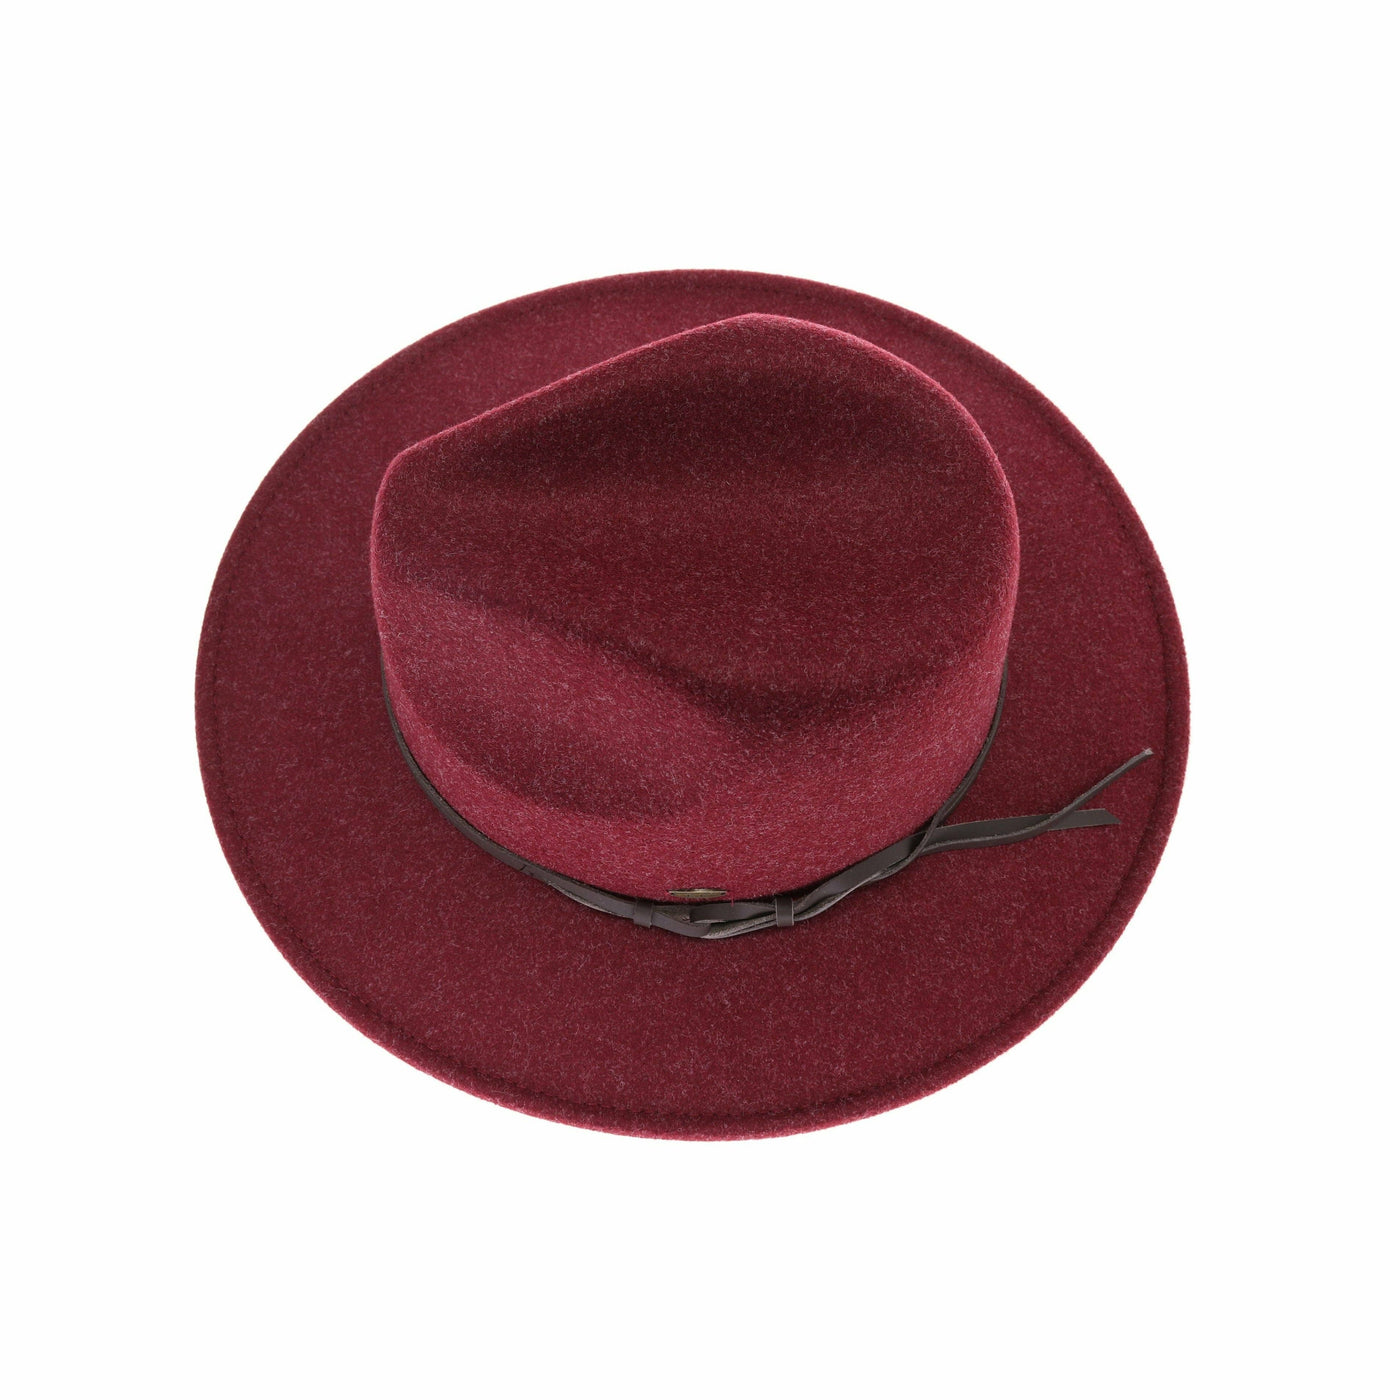 C.C Panama HAT - Hitch Knot Trim Vegan Fabric